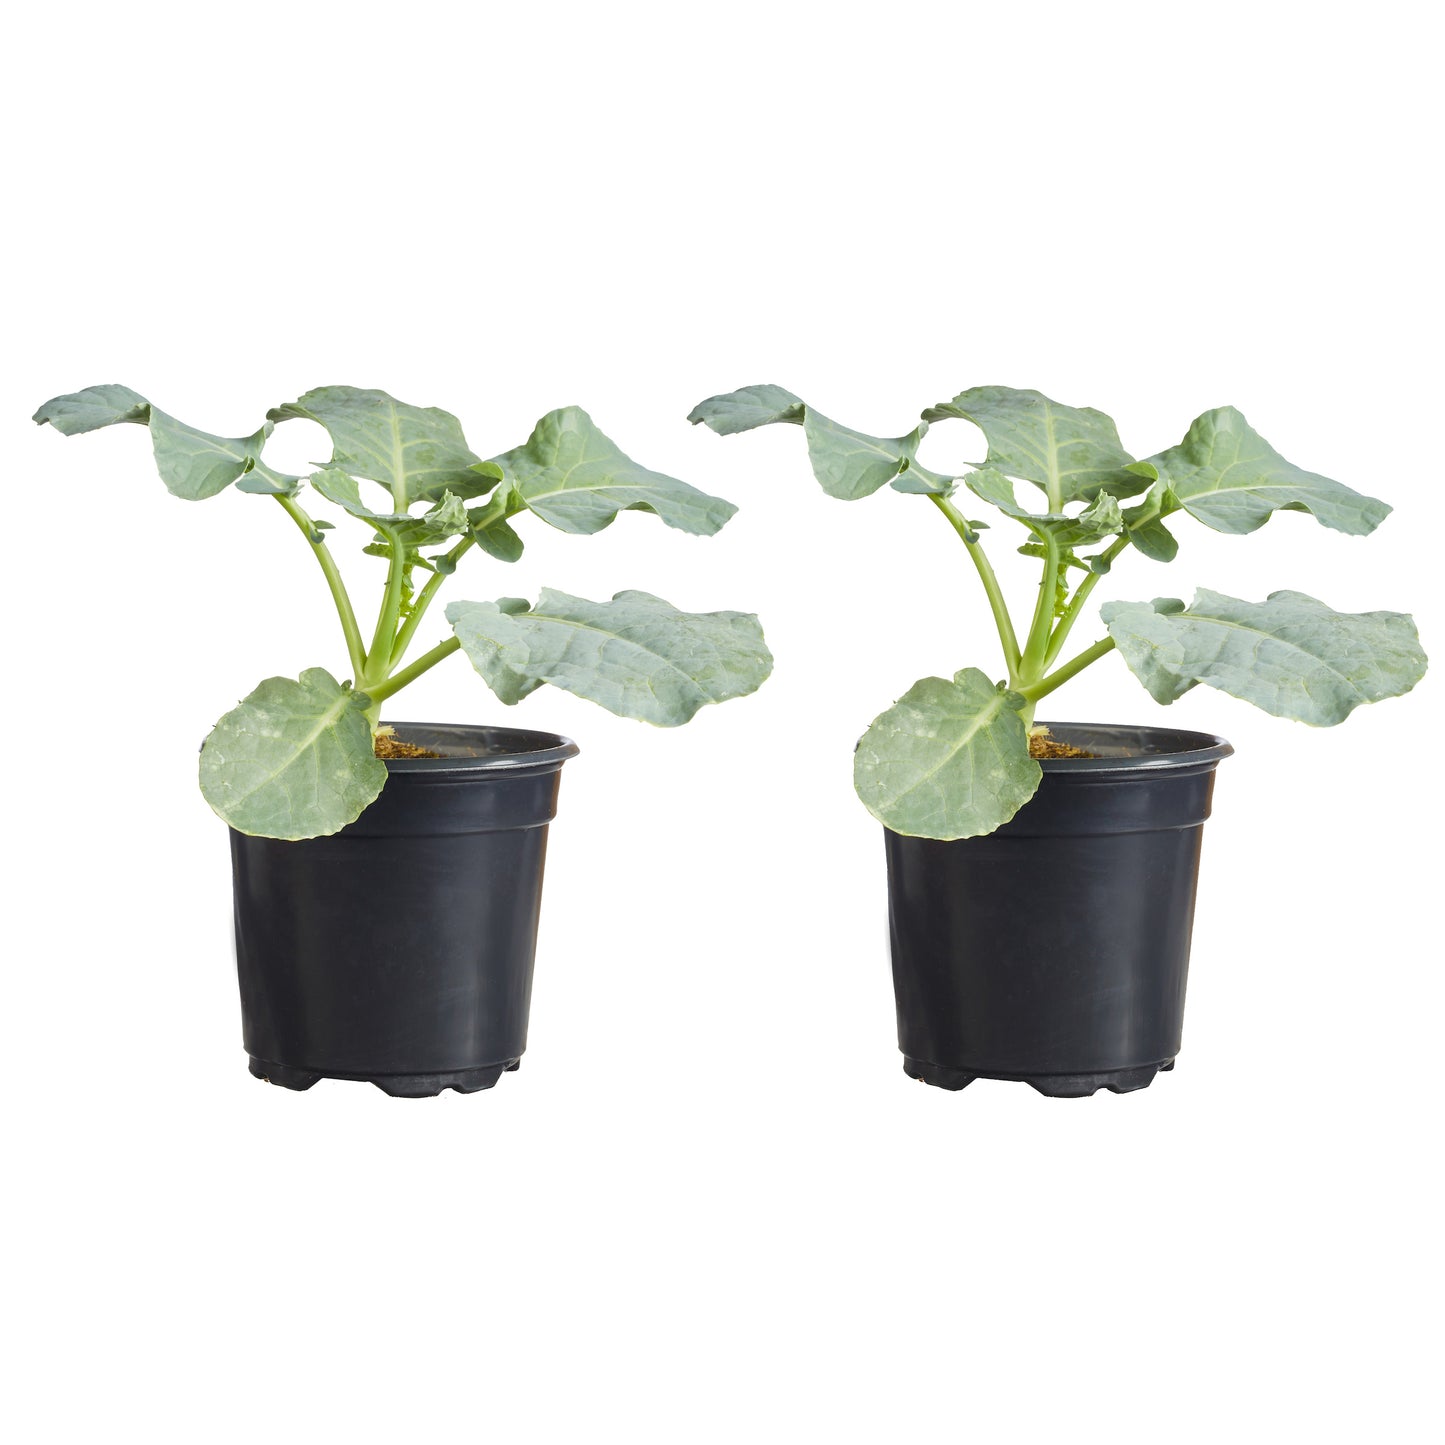 Broccoli Lieutenant Plantlings Plus Live Baby Plants 4in. Pot, 2-Pack